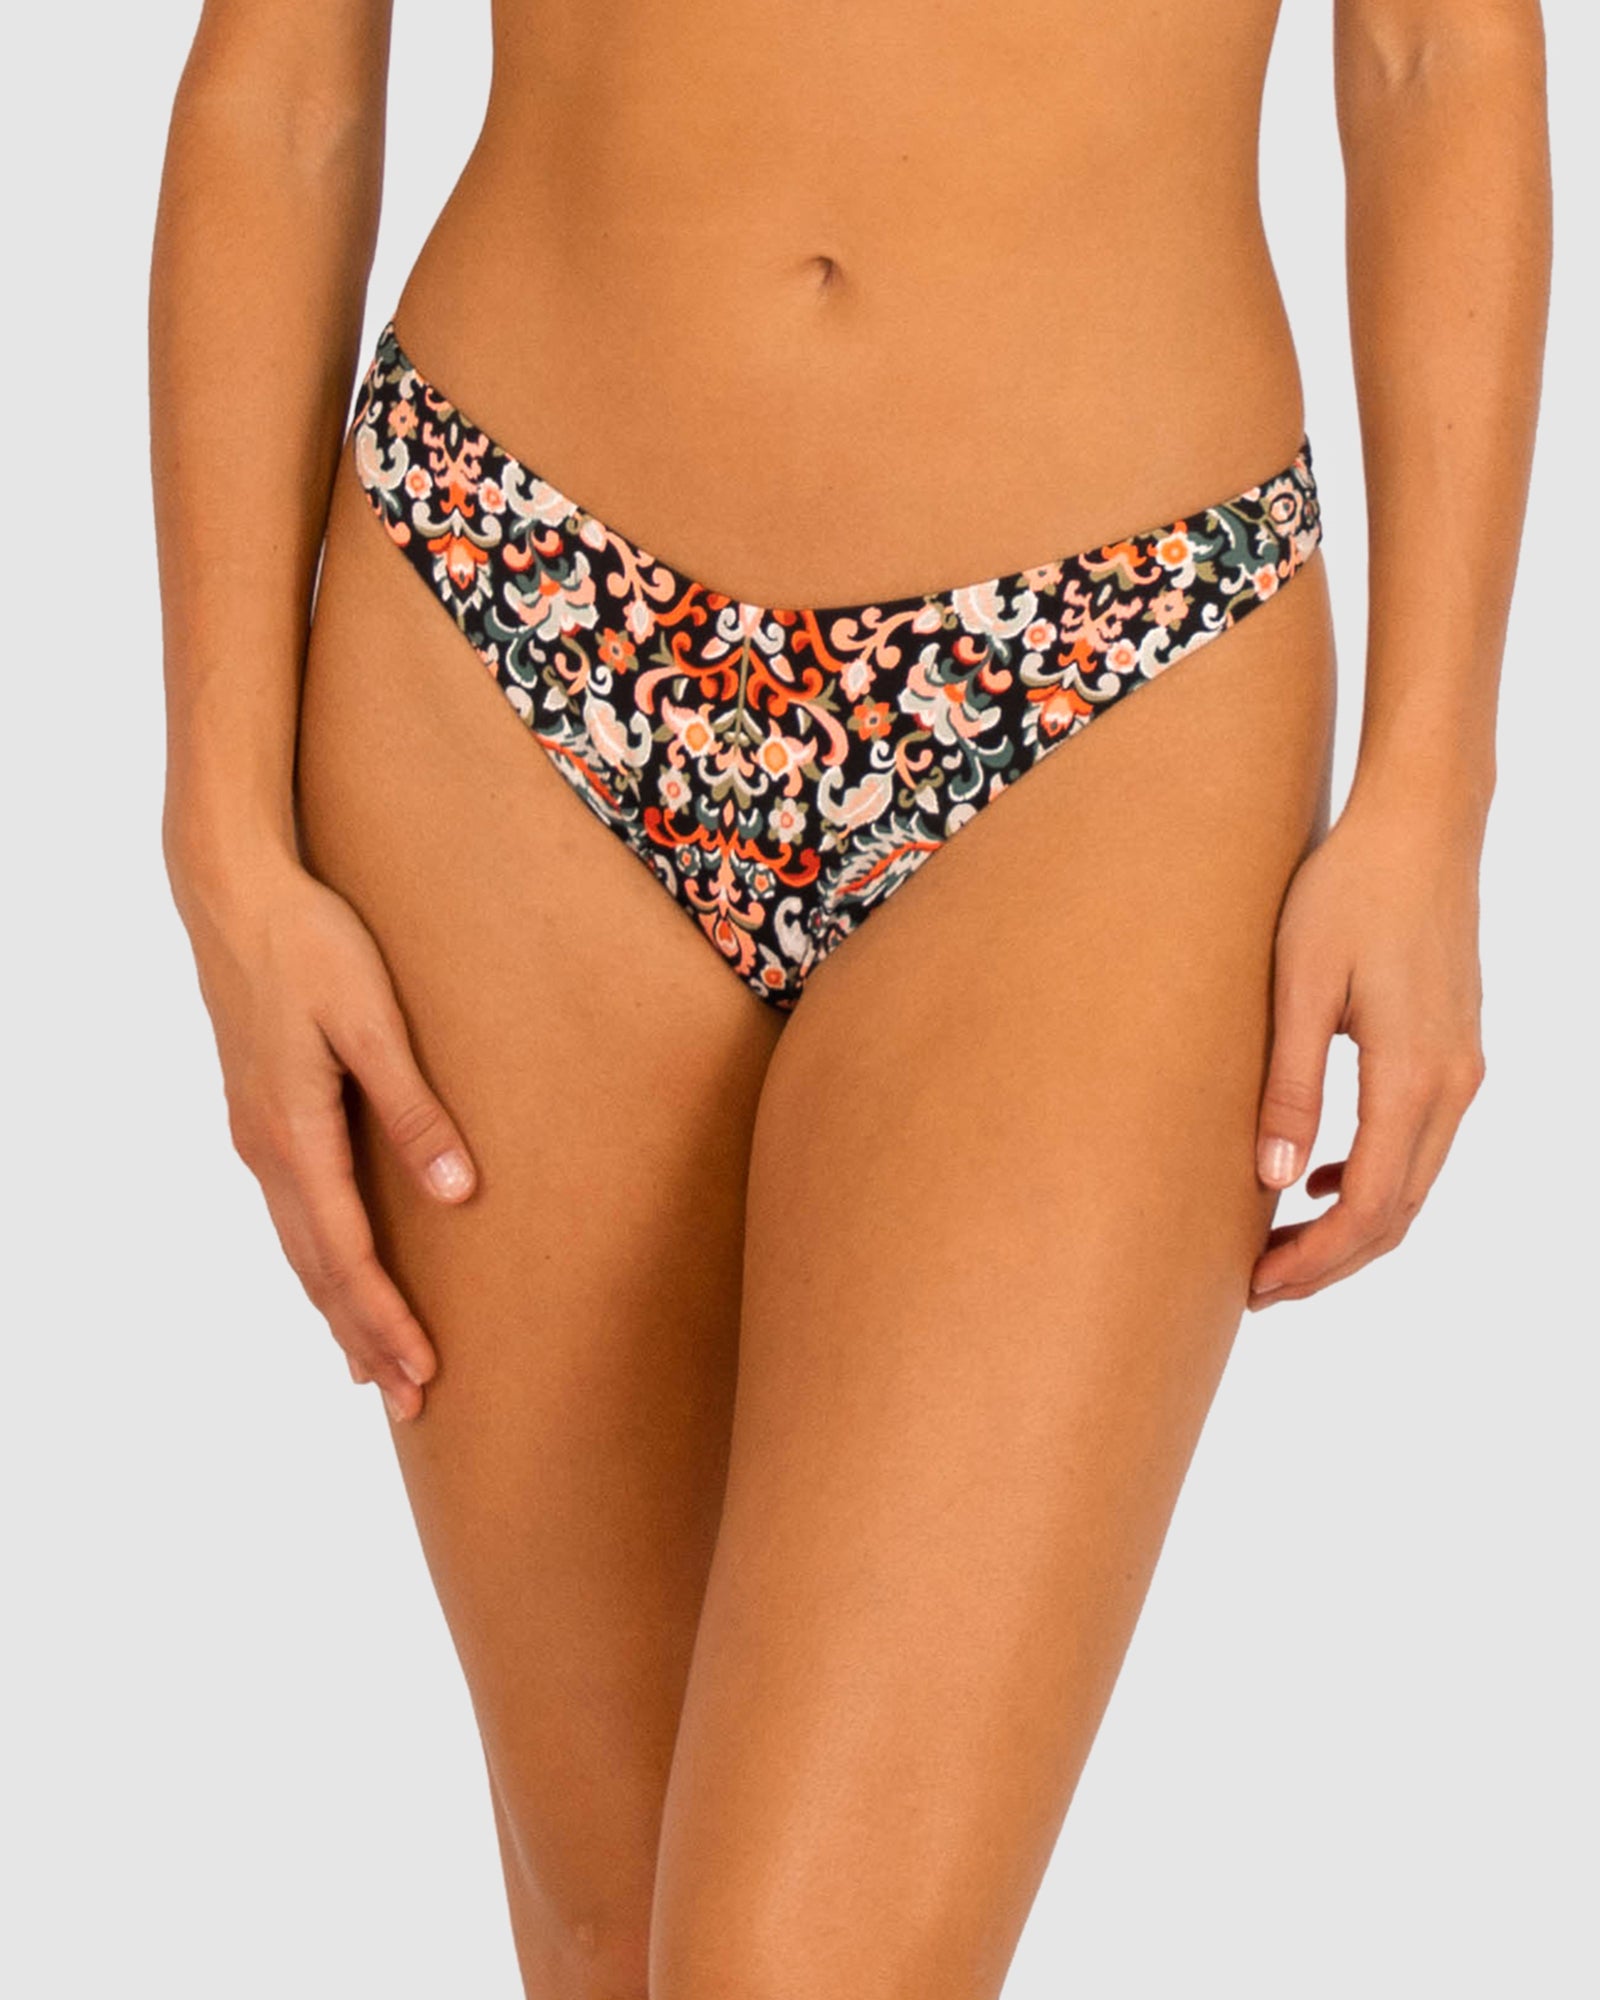 Cheeky Bikini Bottoms for Women, Colorful Swimsuit Panties, Boho